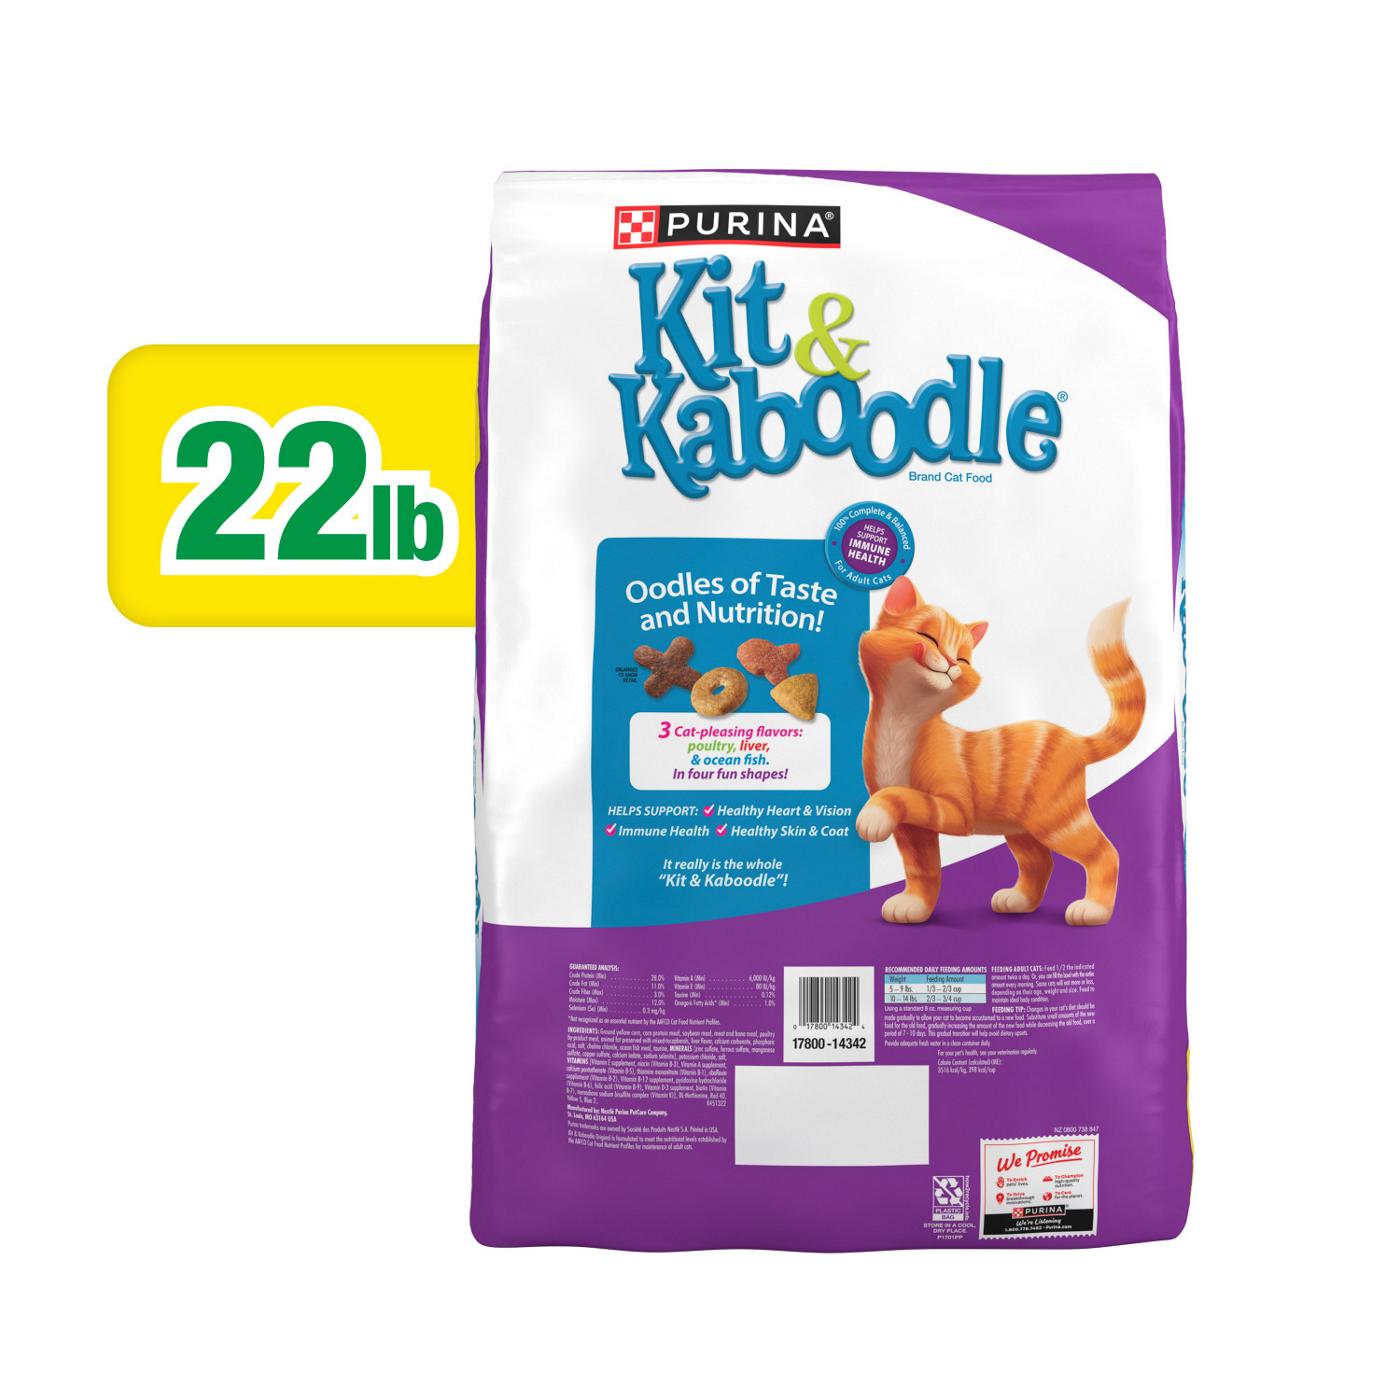 Kit & Kaboodle Original Dry Cat Food; image 4 of 7